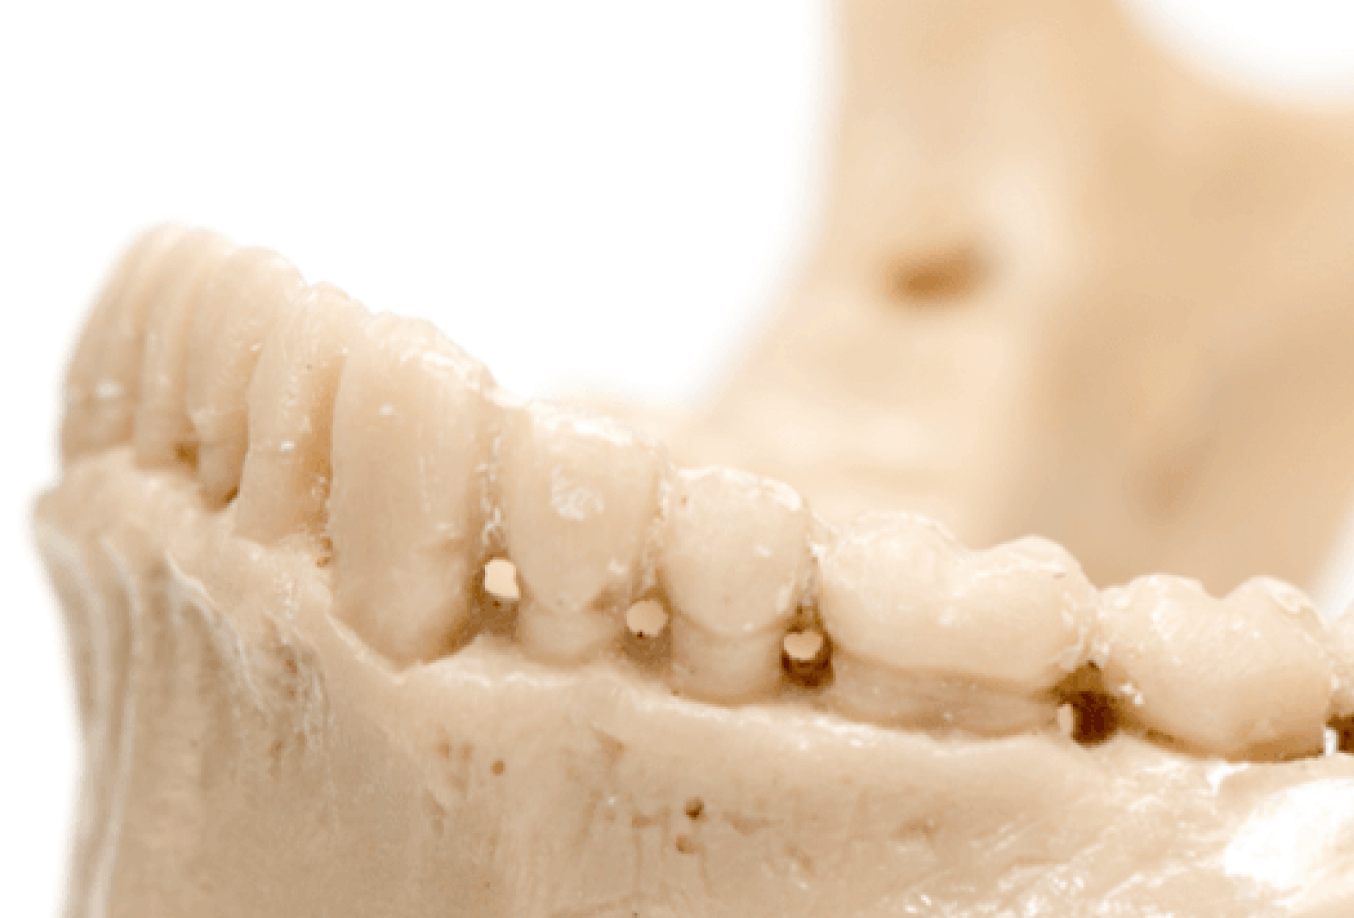 Dental impressions of bottom jaw